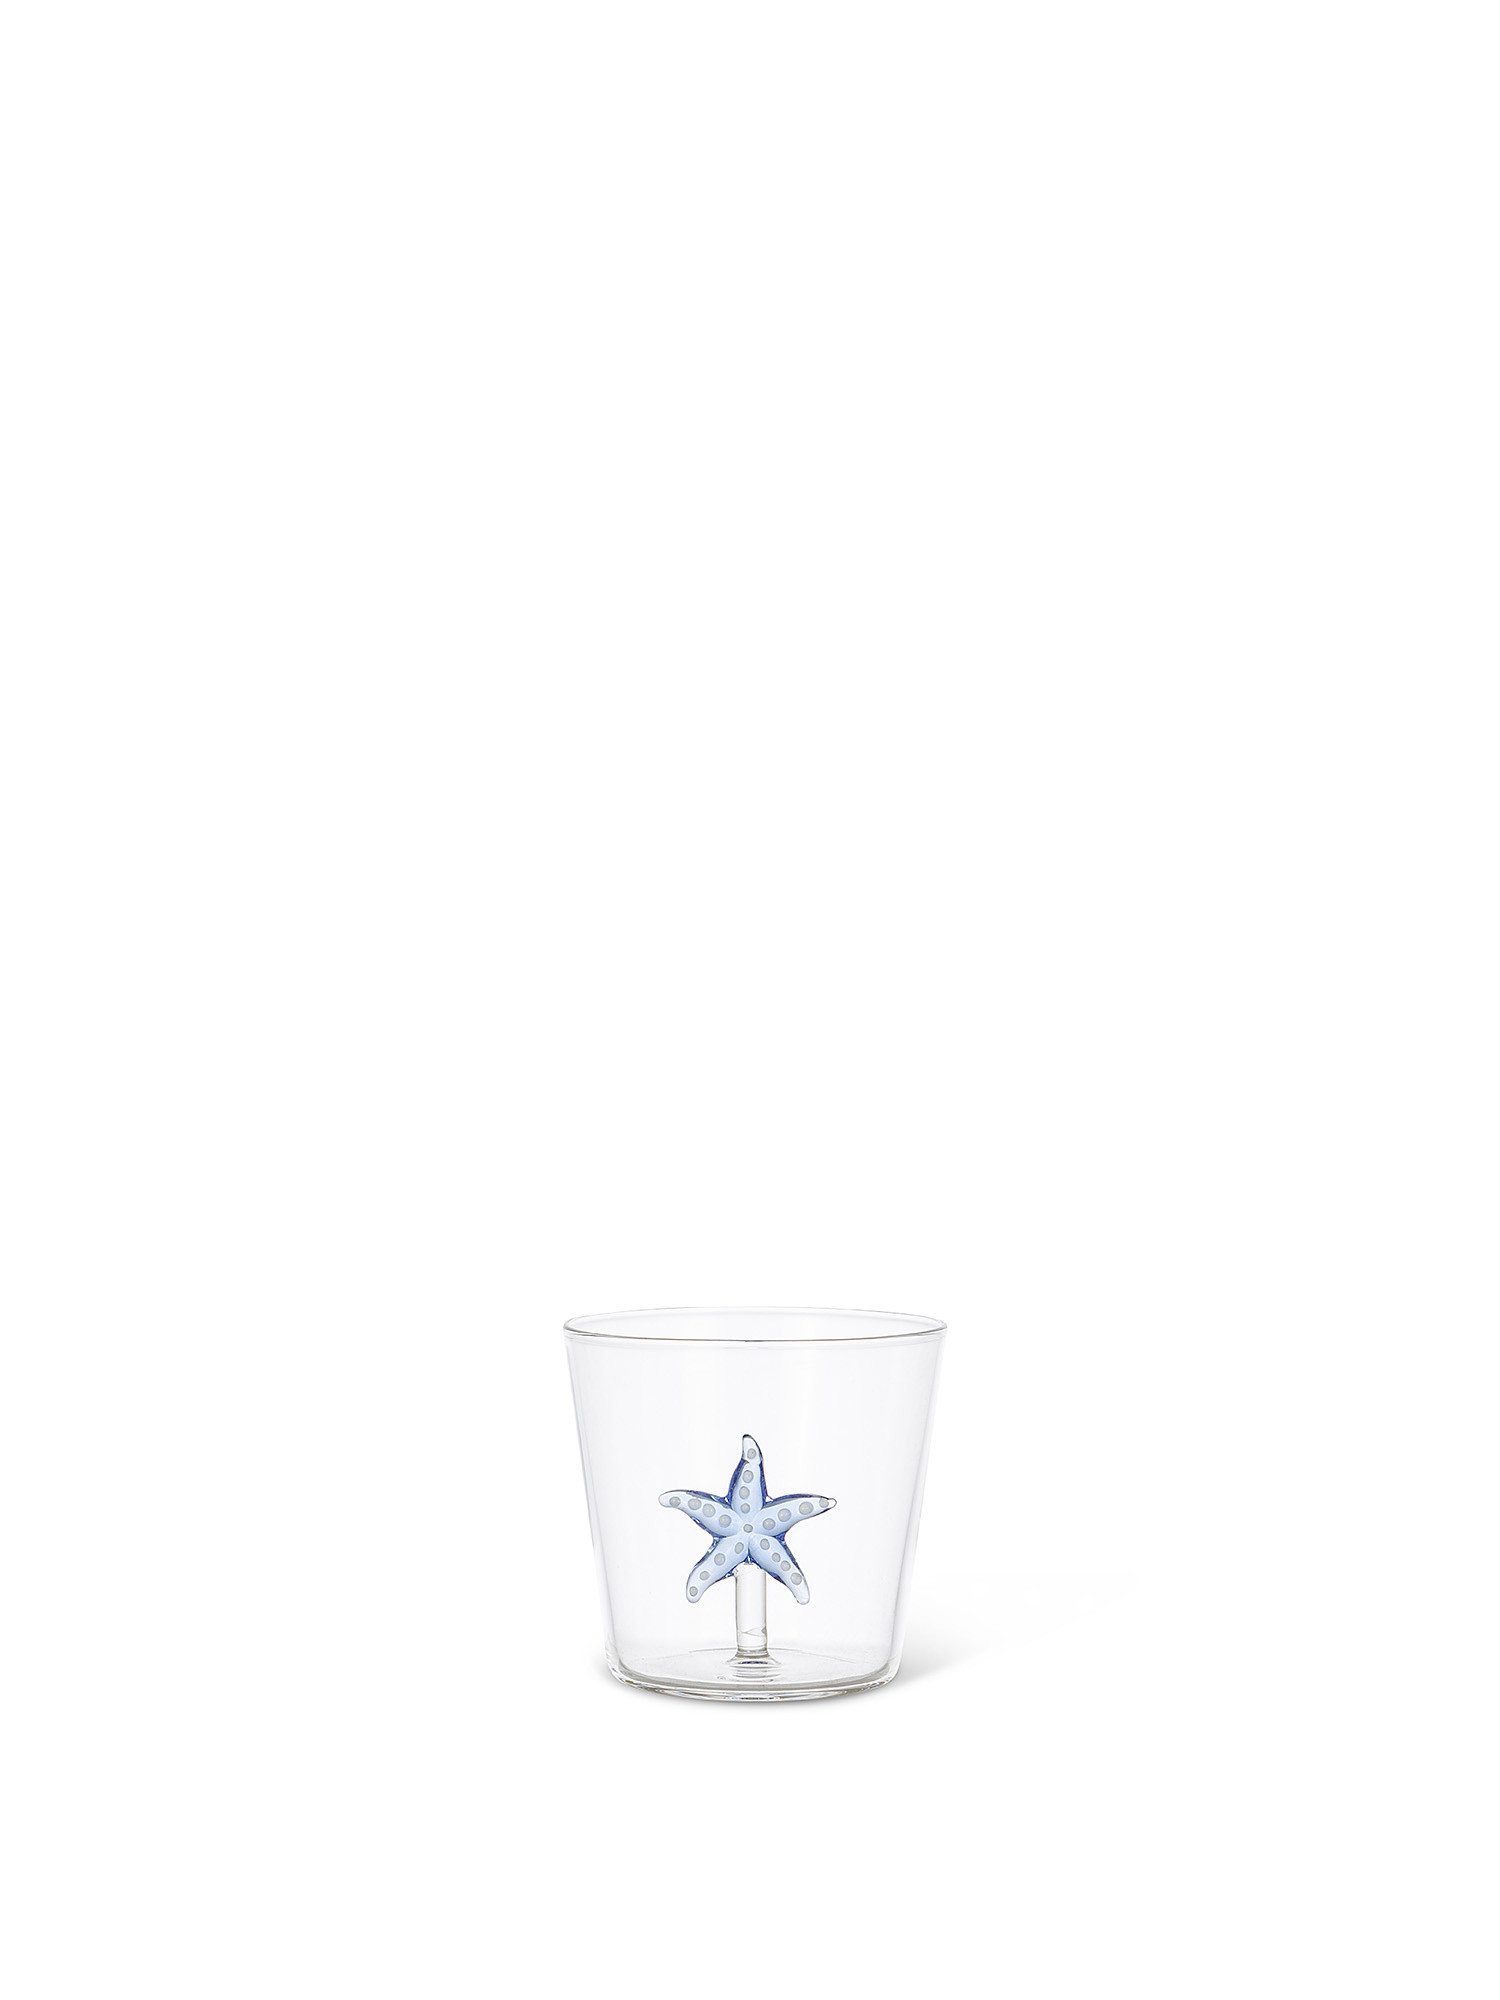 Bicchiere vetro dettaglio stella marina, Trasparente, large image number 0